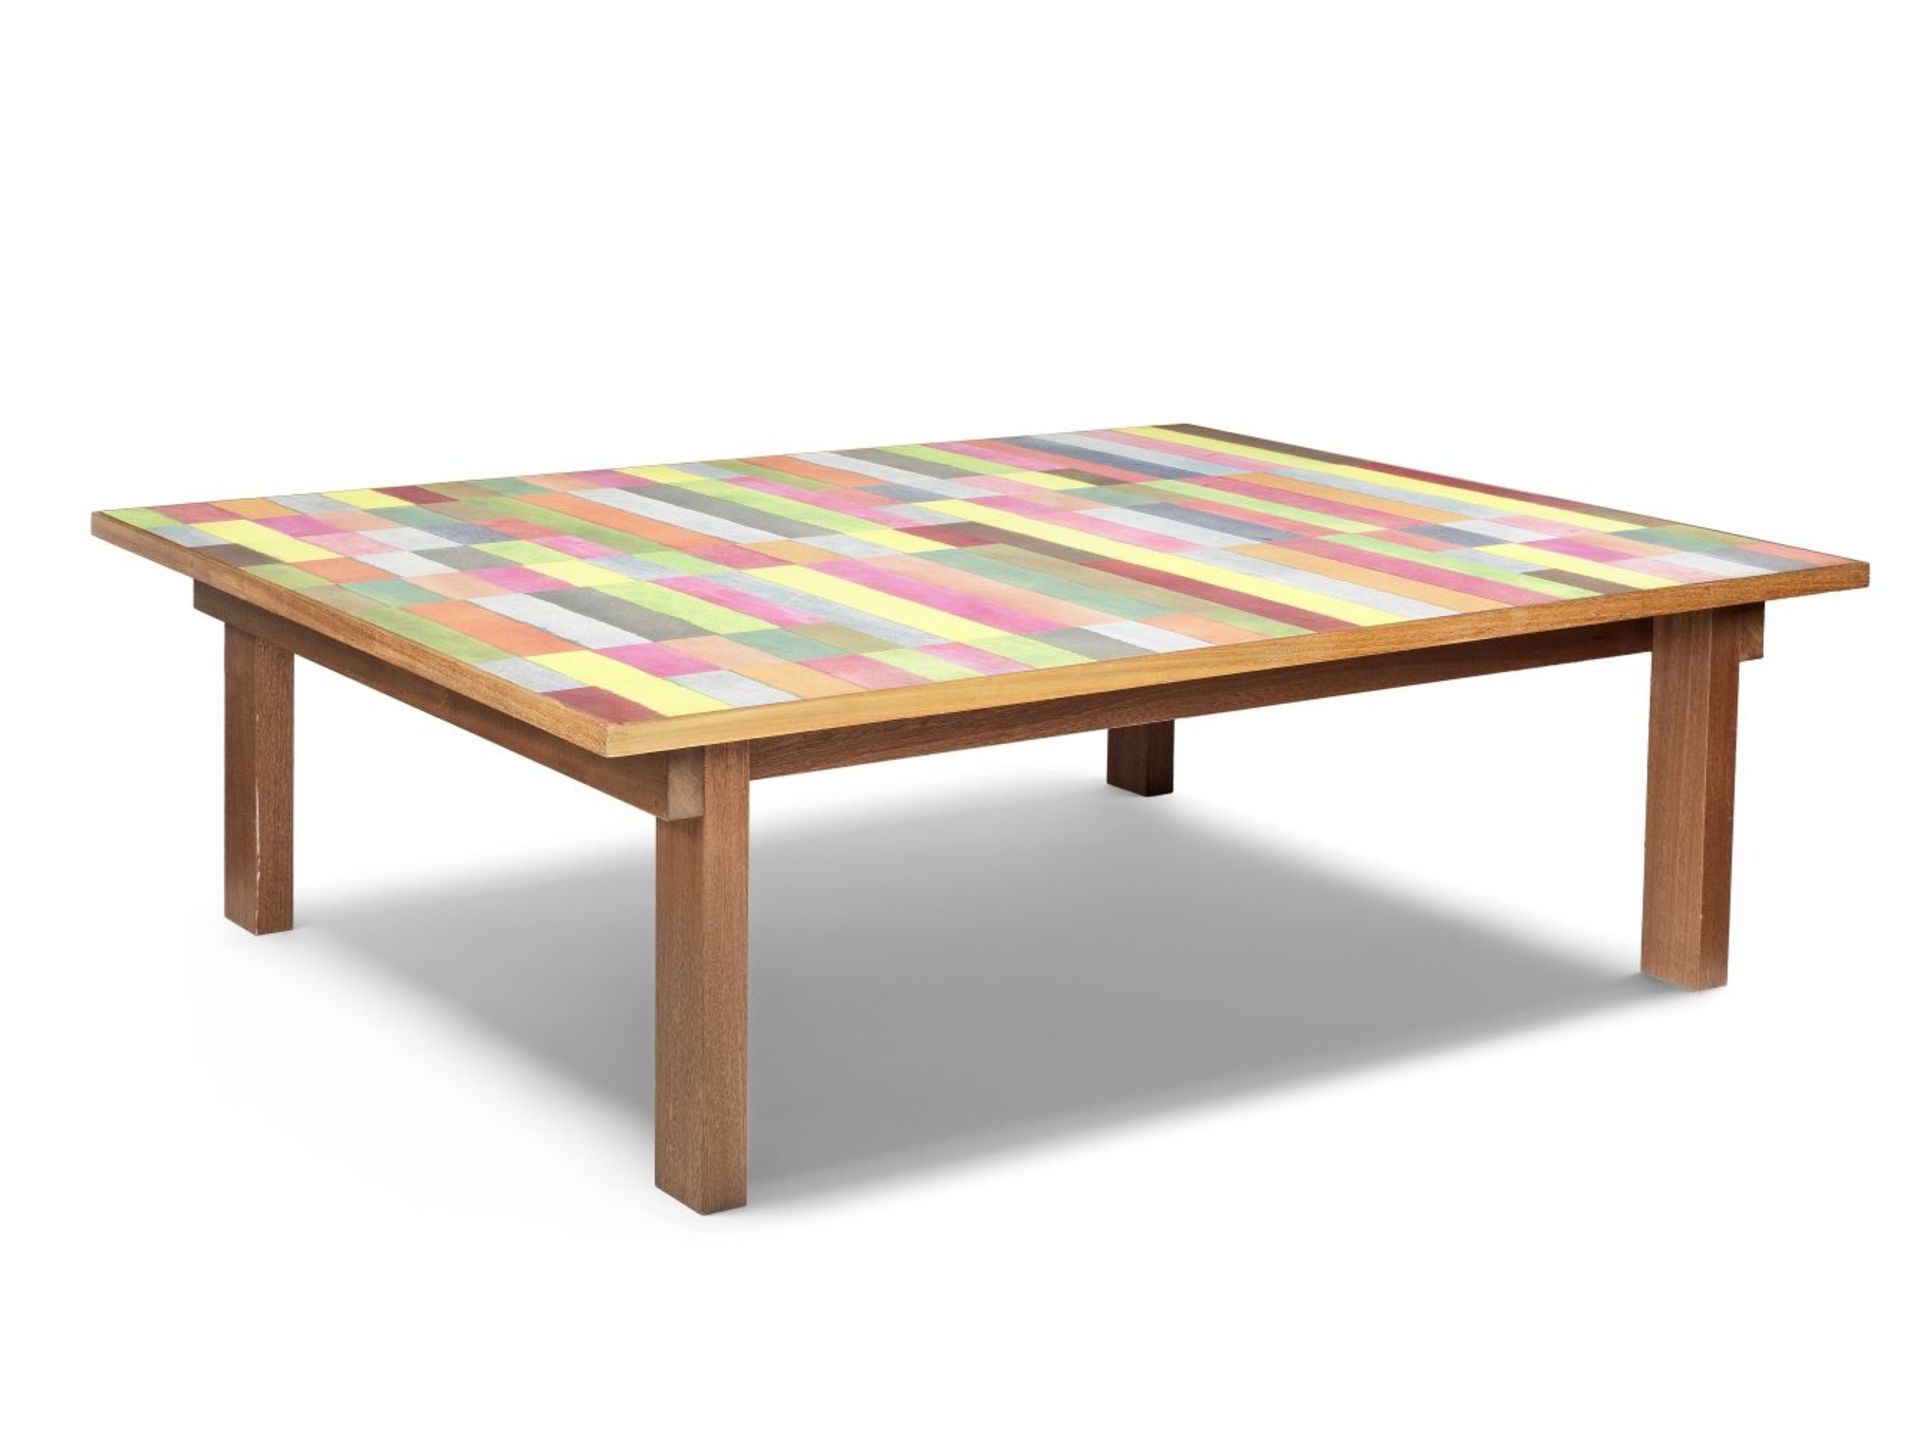 Danad Design (1958-62) Multicolour Rectangles Table 114cm (44 7/8in) long, 87cm (34 1/4in) wide, ...